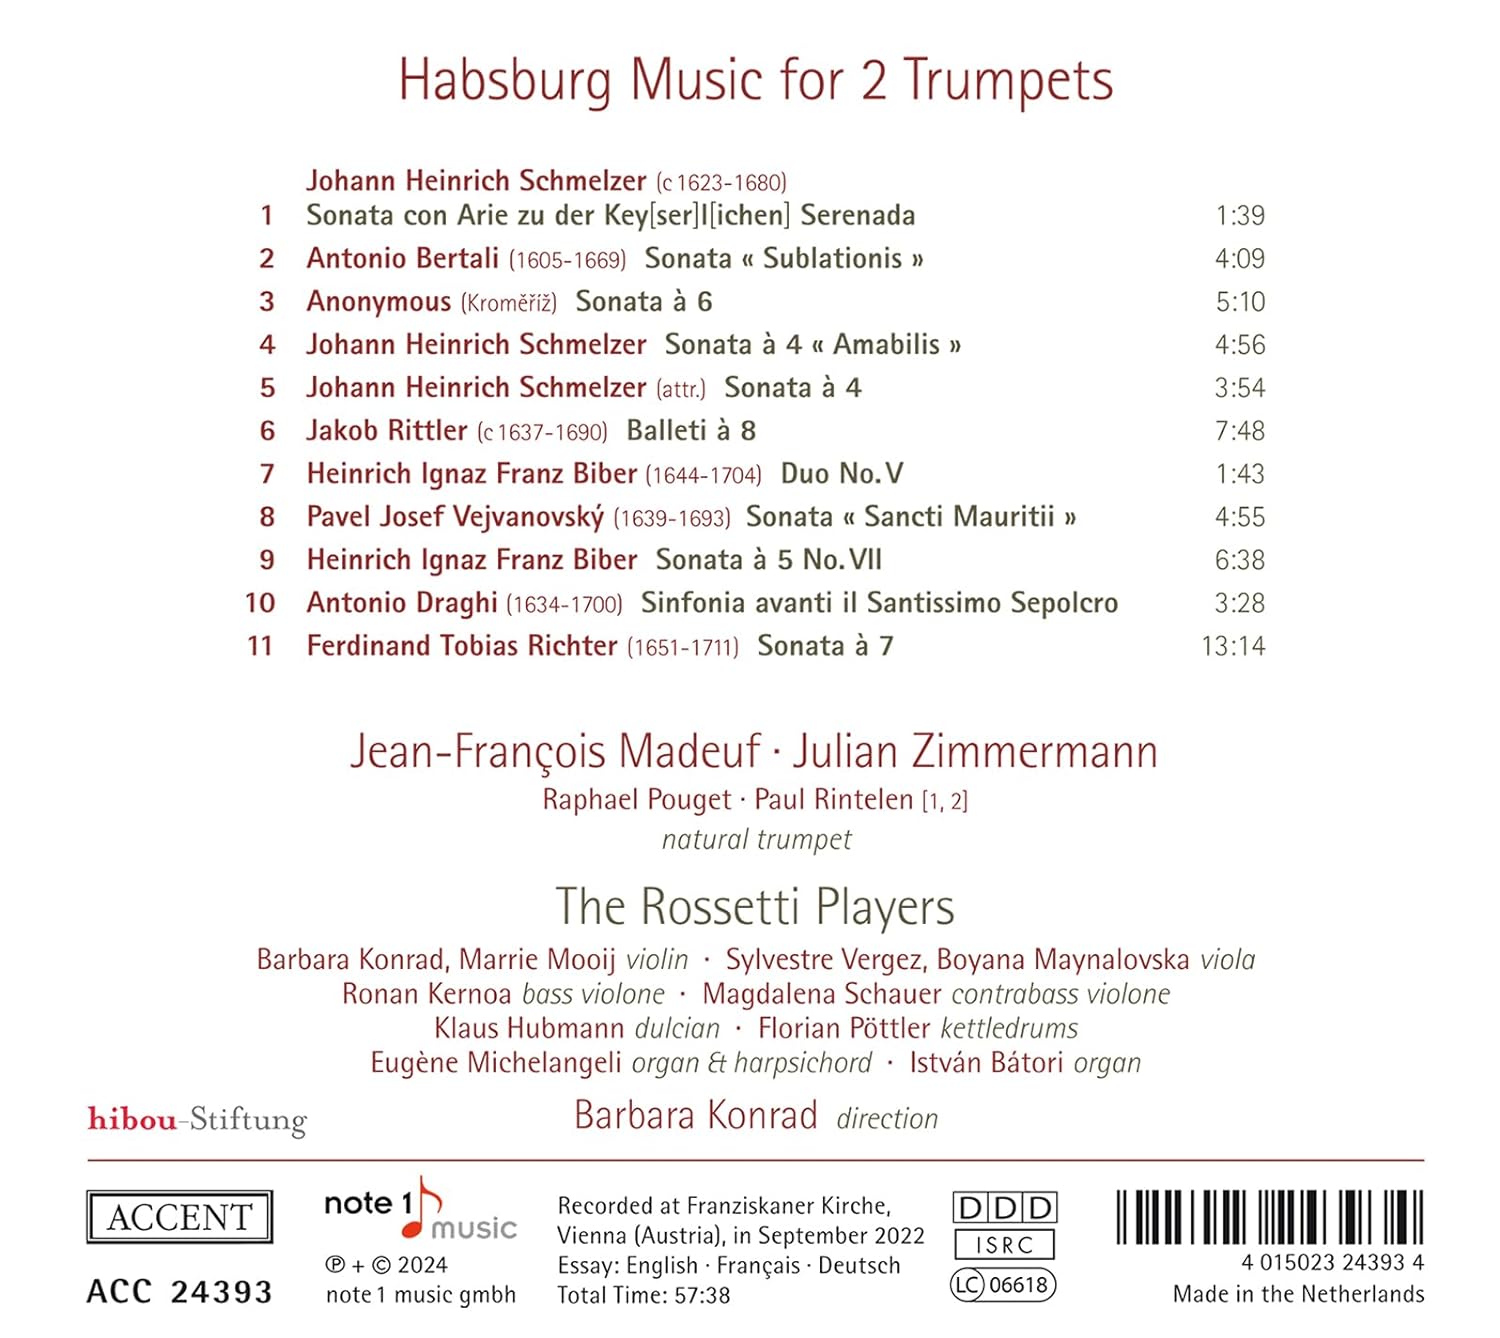 Jean-Francois Madeuf / Julian Zimmermann 두 대의 트럼펫을 위한 합스부르크 제국의 음악 - 슈멜처, 베르탈리, 비버, 리틀러 외 (Habsburg Music For Two Trumpets)